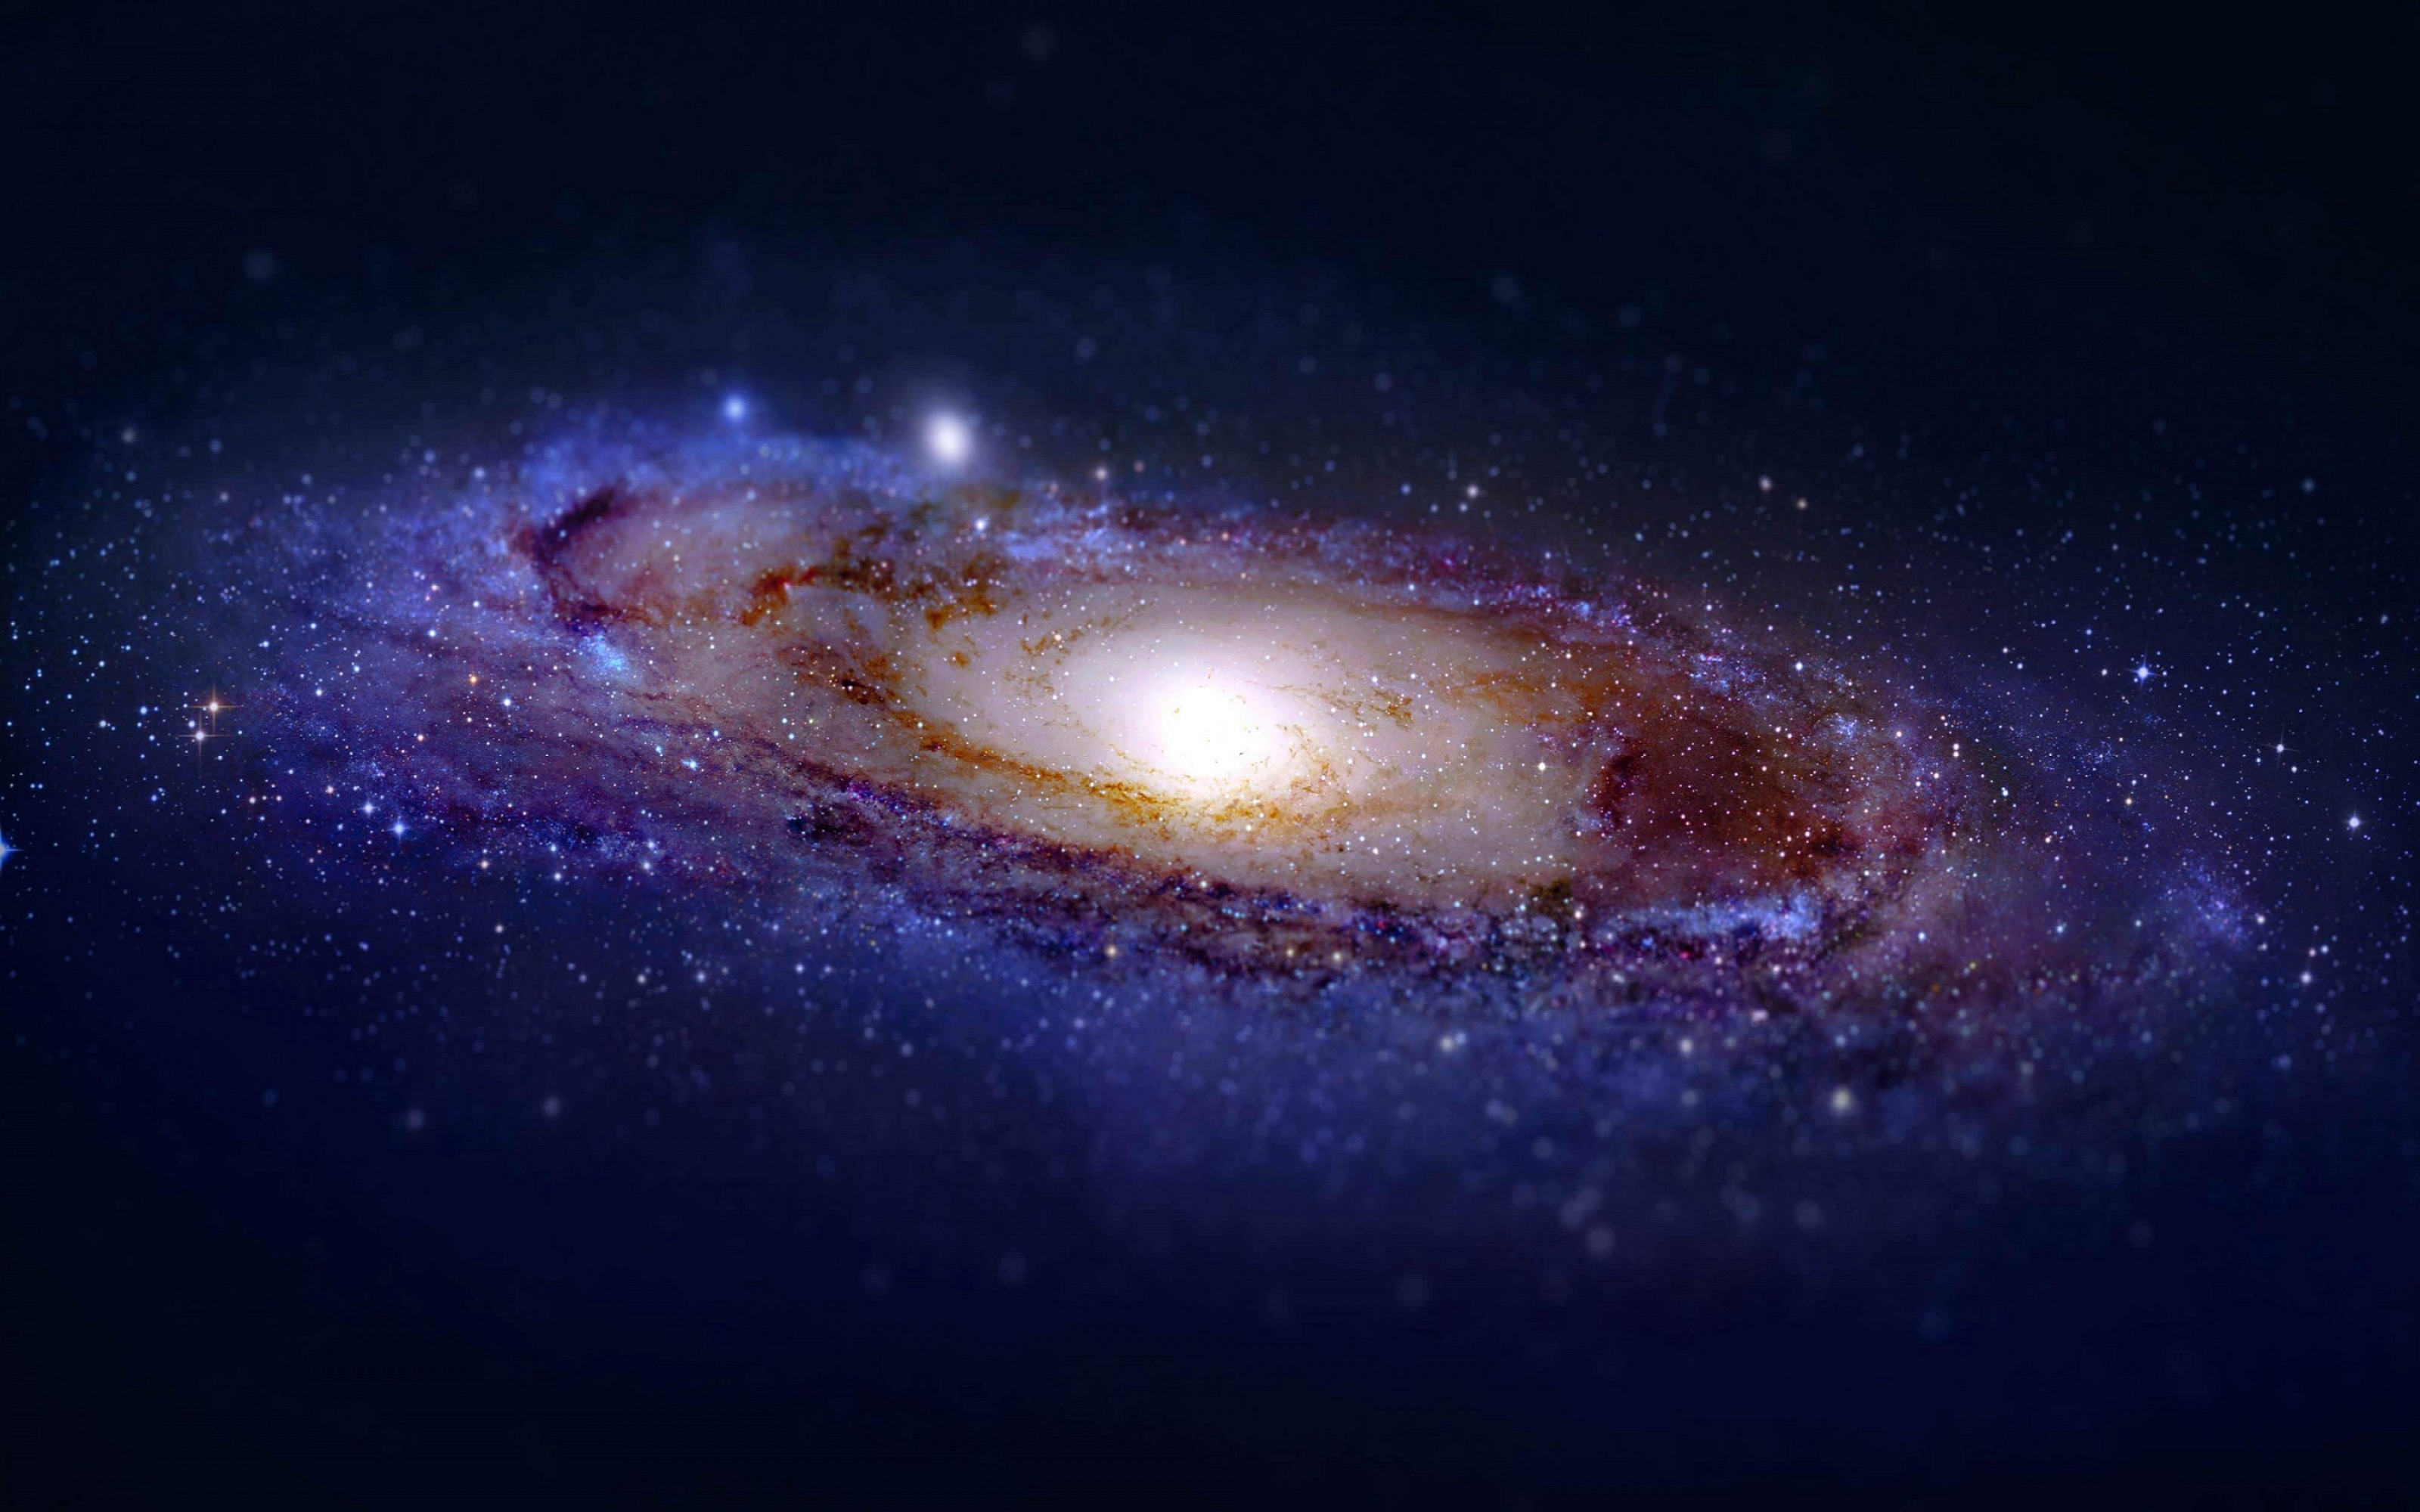 Andromeda Galaxy for 3200 x 2000 Wide Retina Display resolution